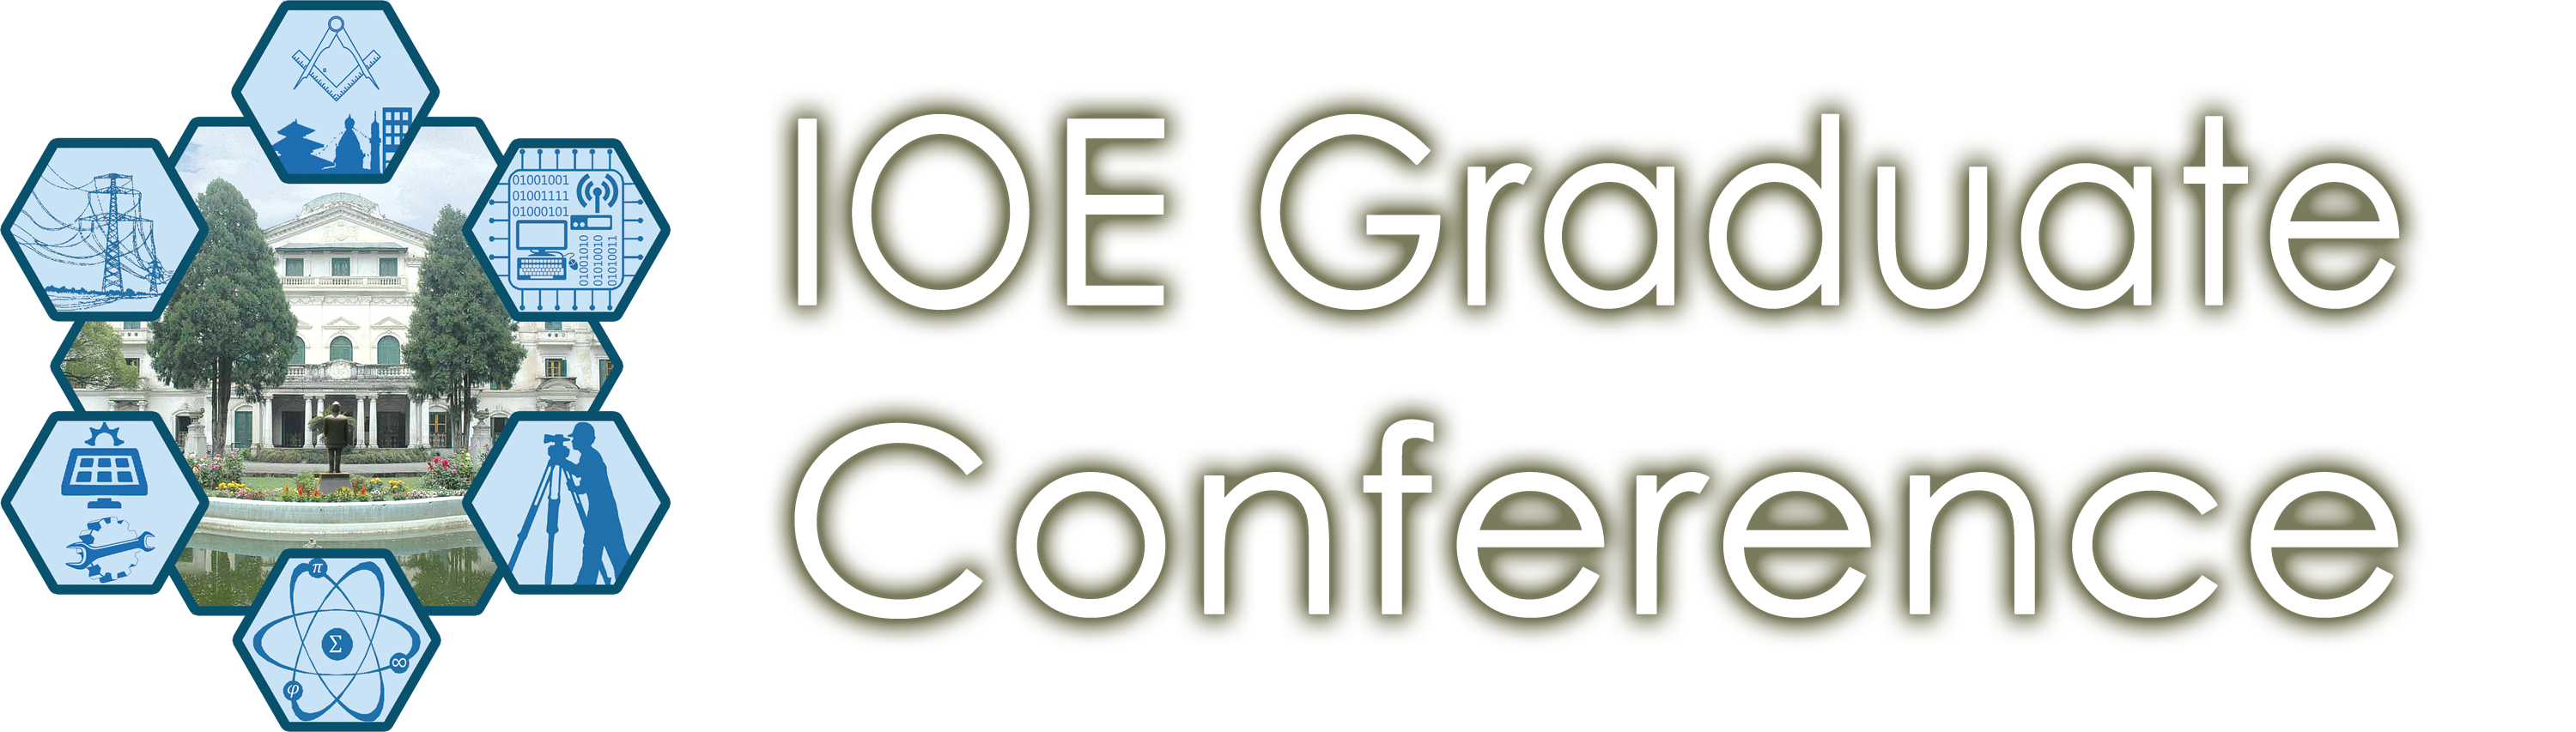 IOE Graduate Conference